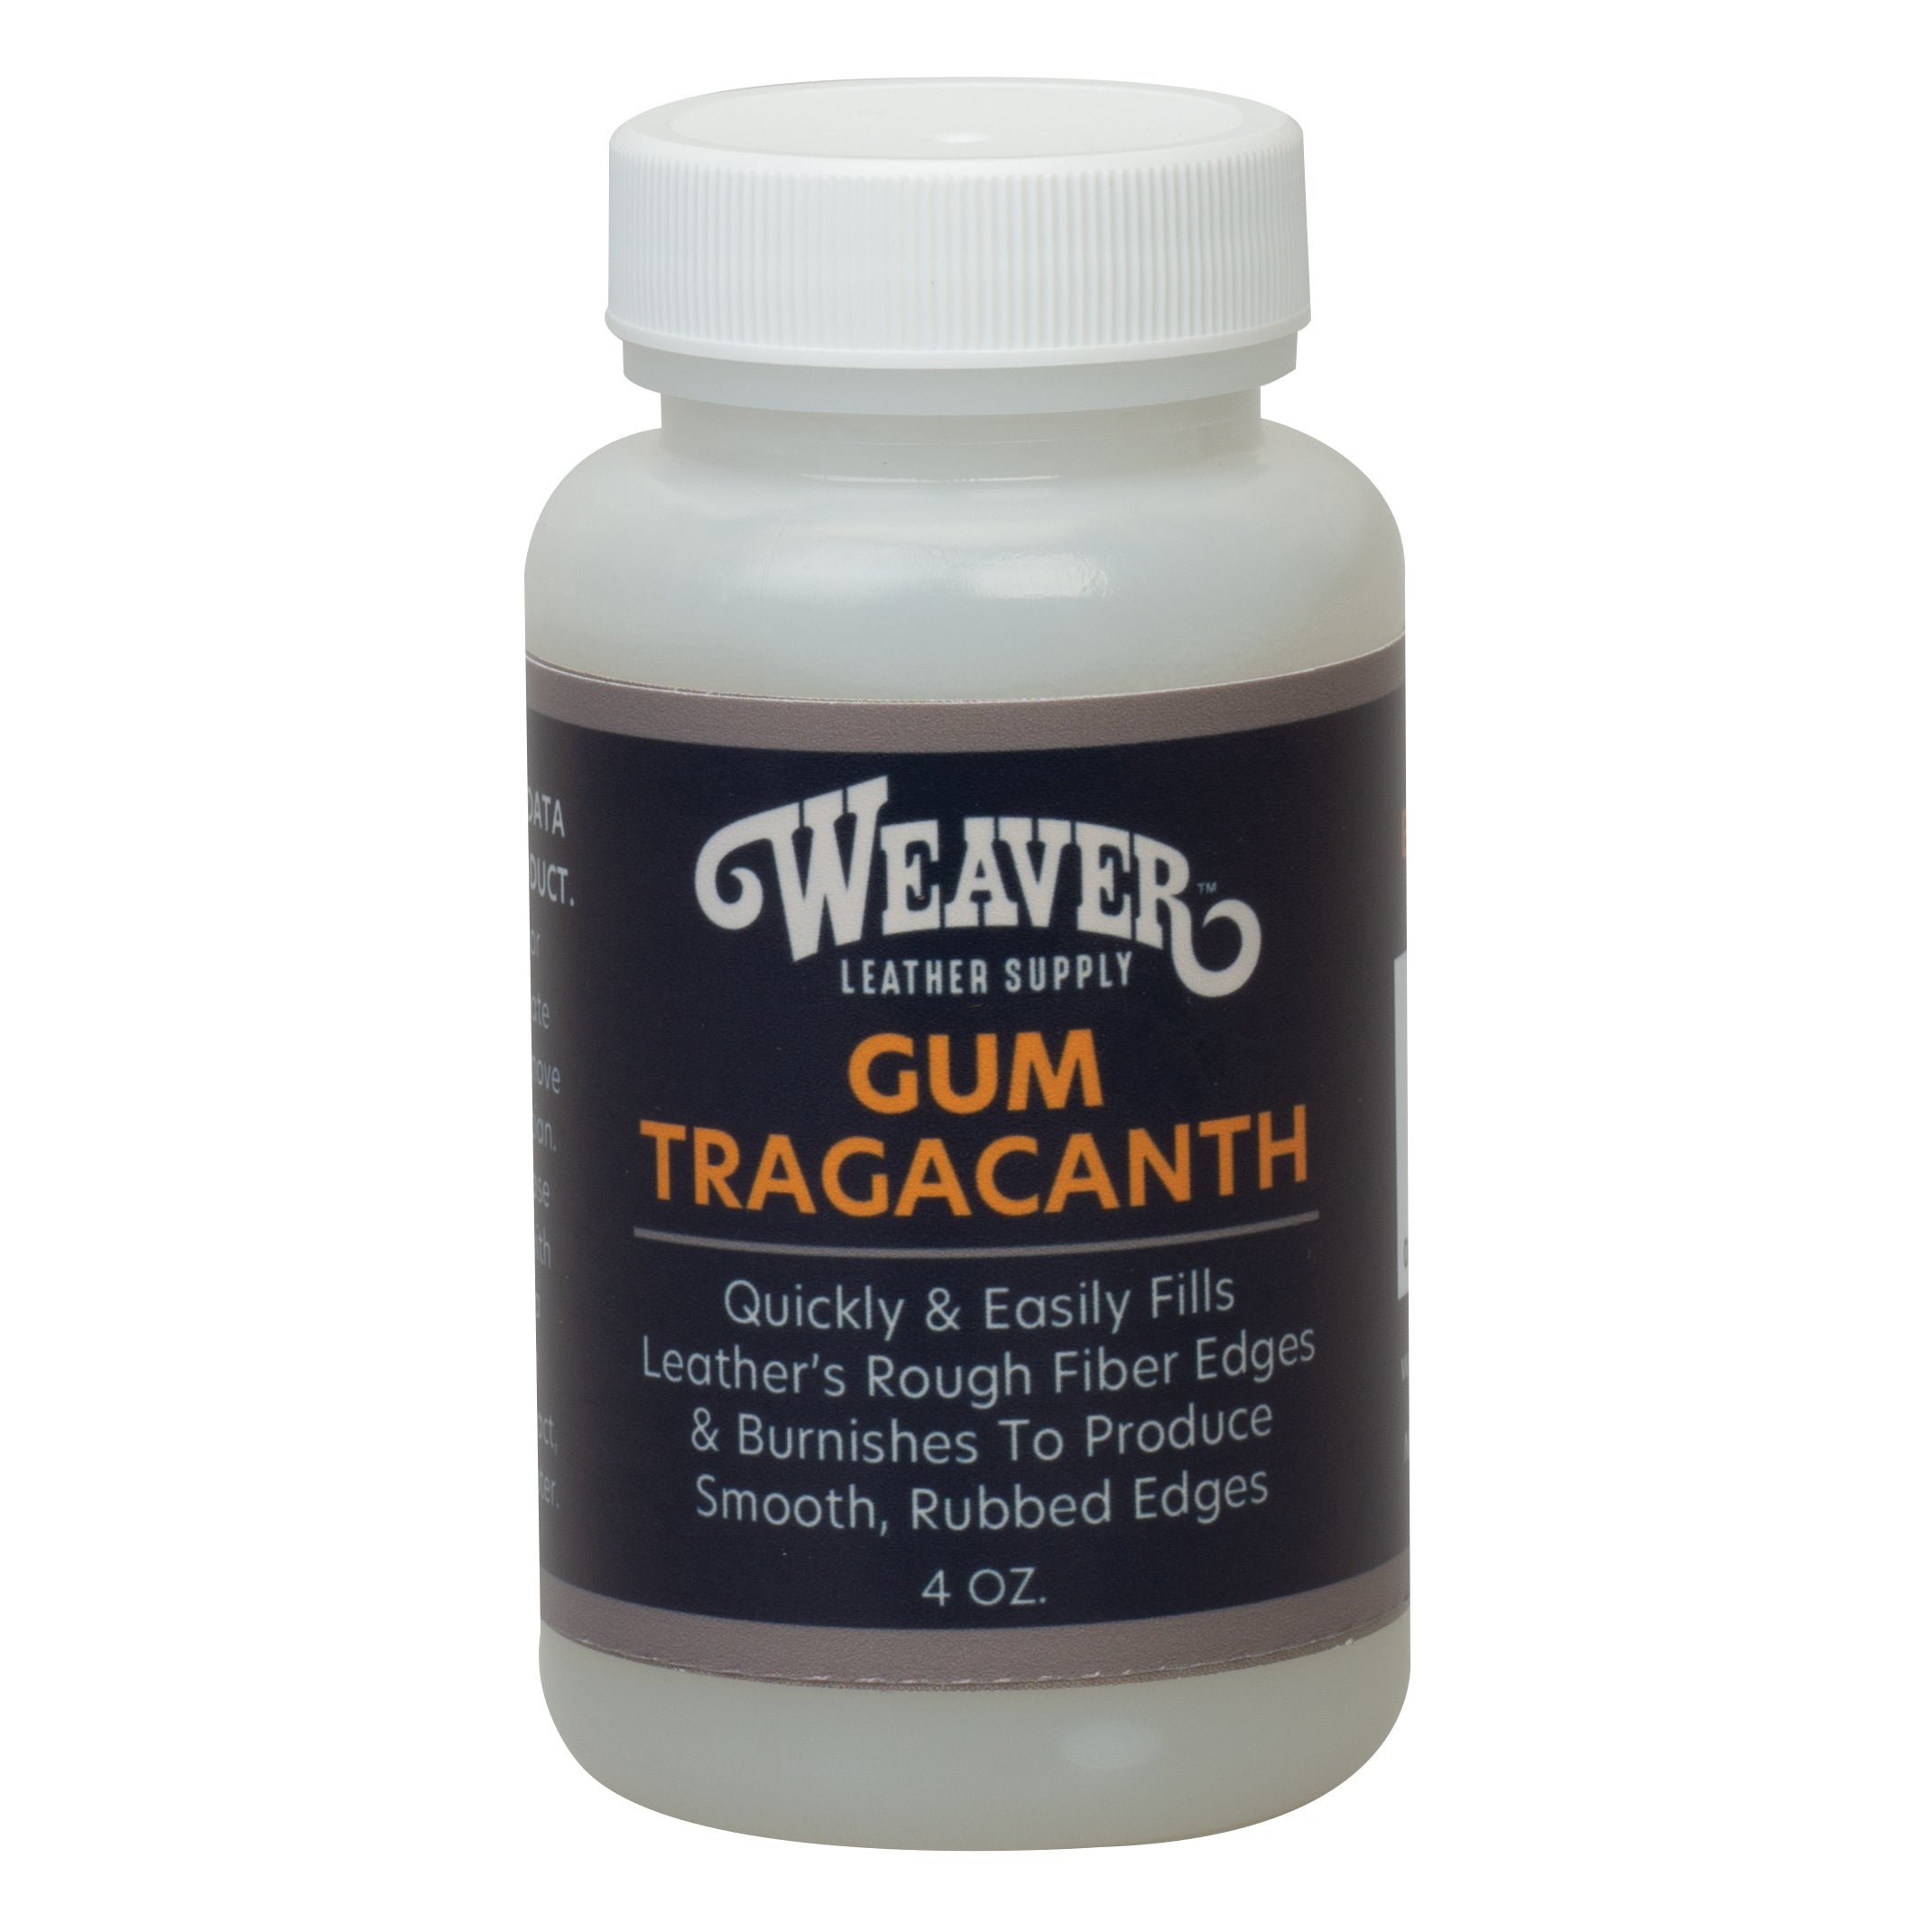 Gum Tragacanth – Higher Mind Incense